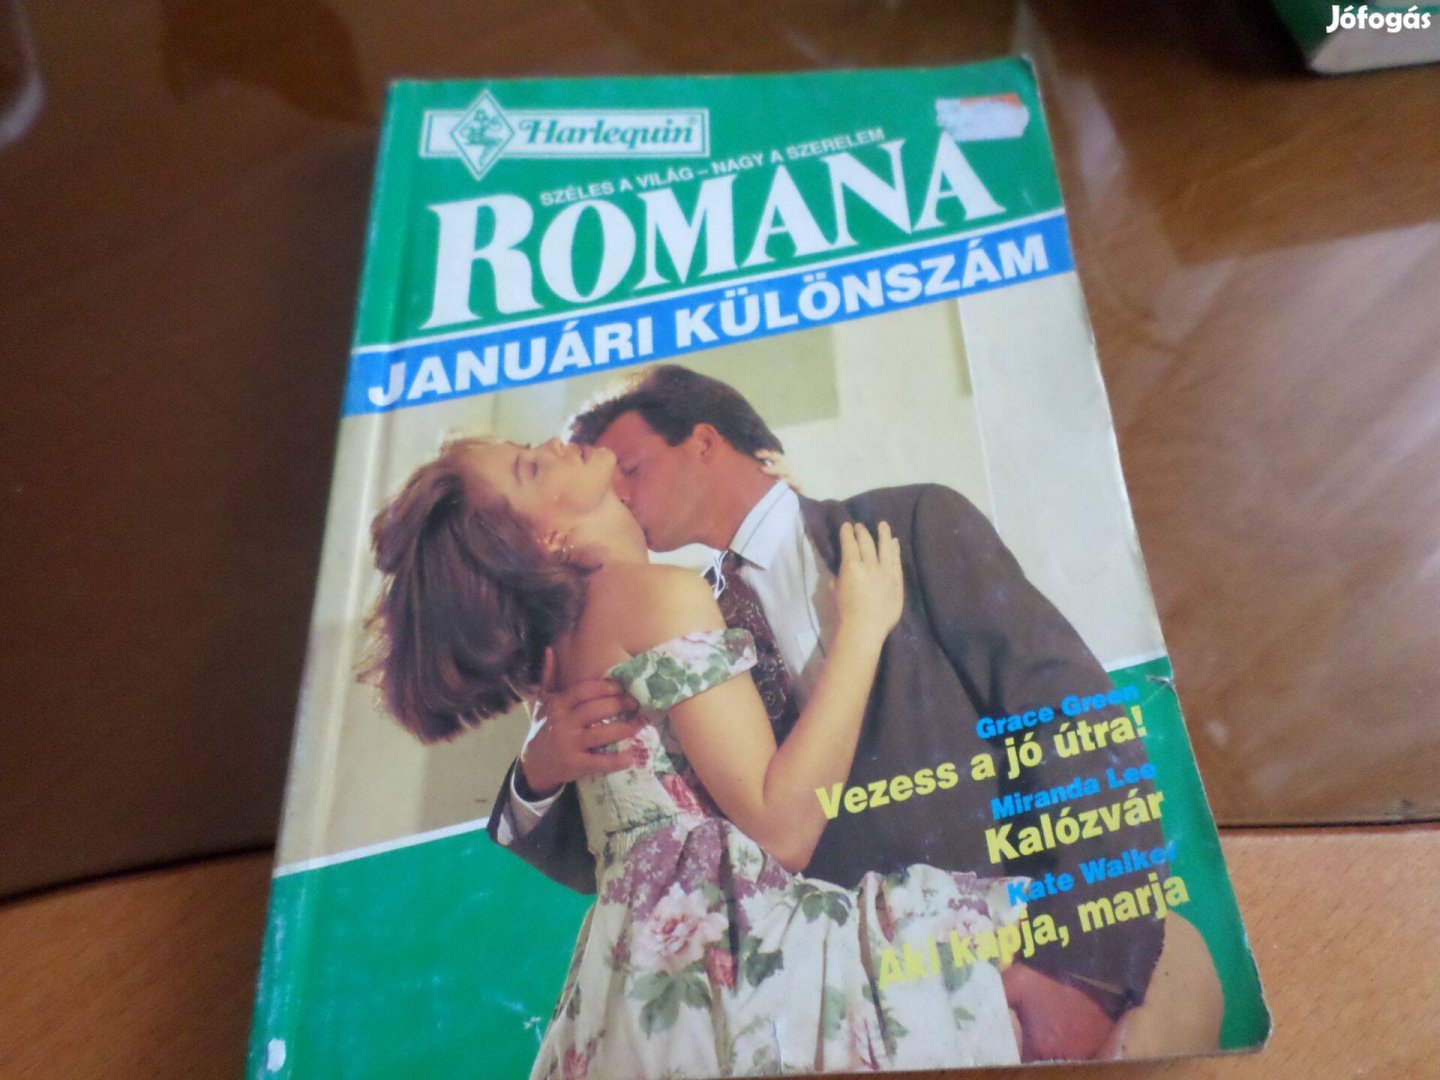 Romana 3 tört. 1995/1. Grace Green Vezess jó útra!, Romantikus